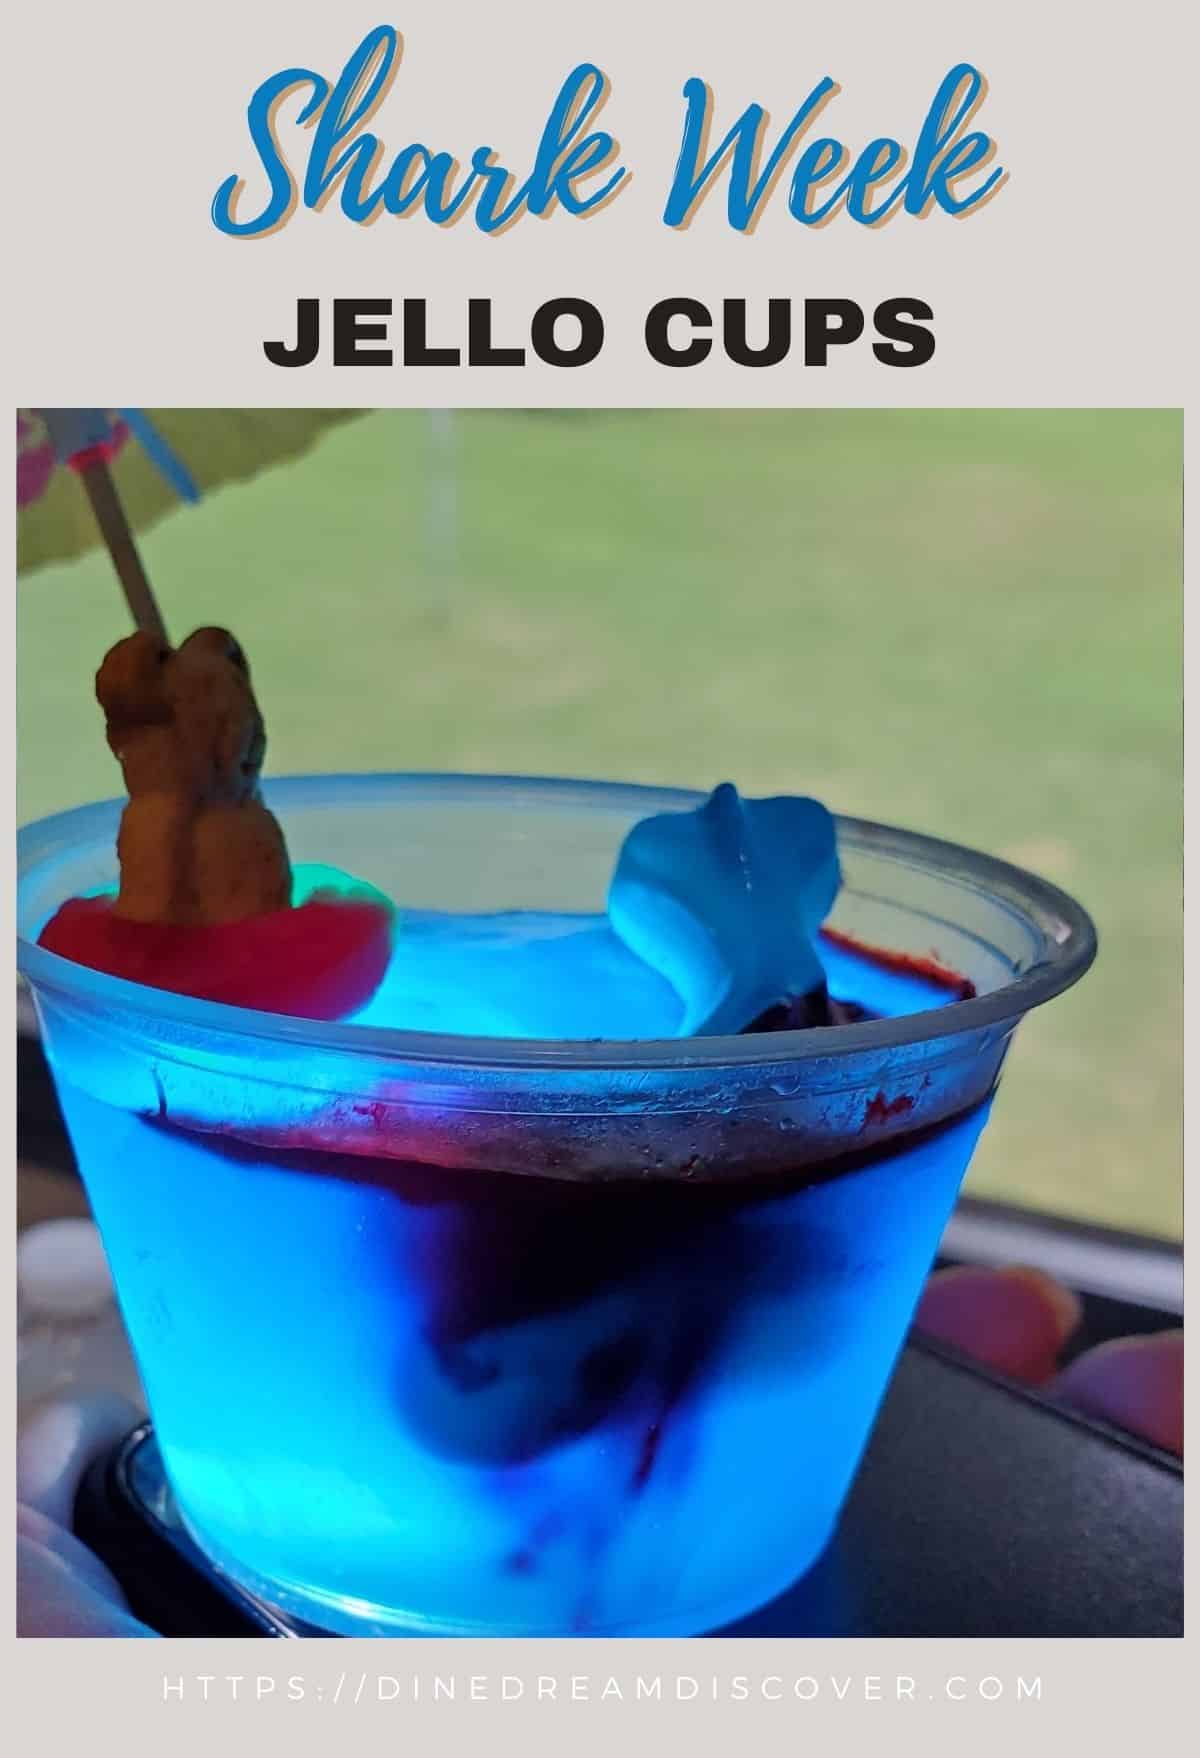 Shark Week Jello Cups 